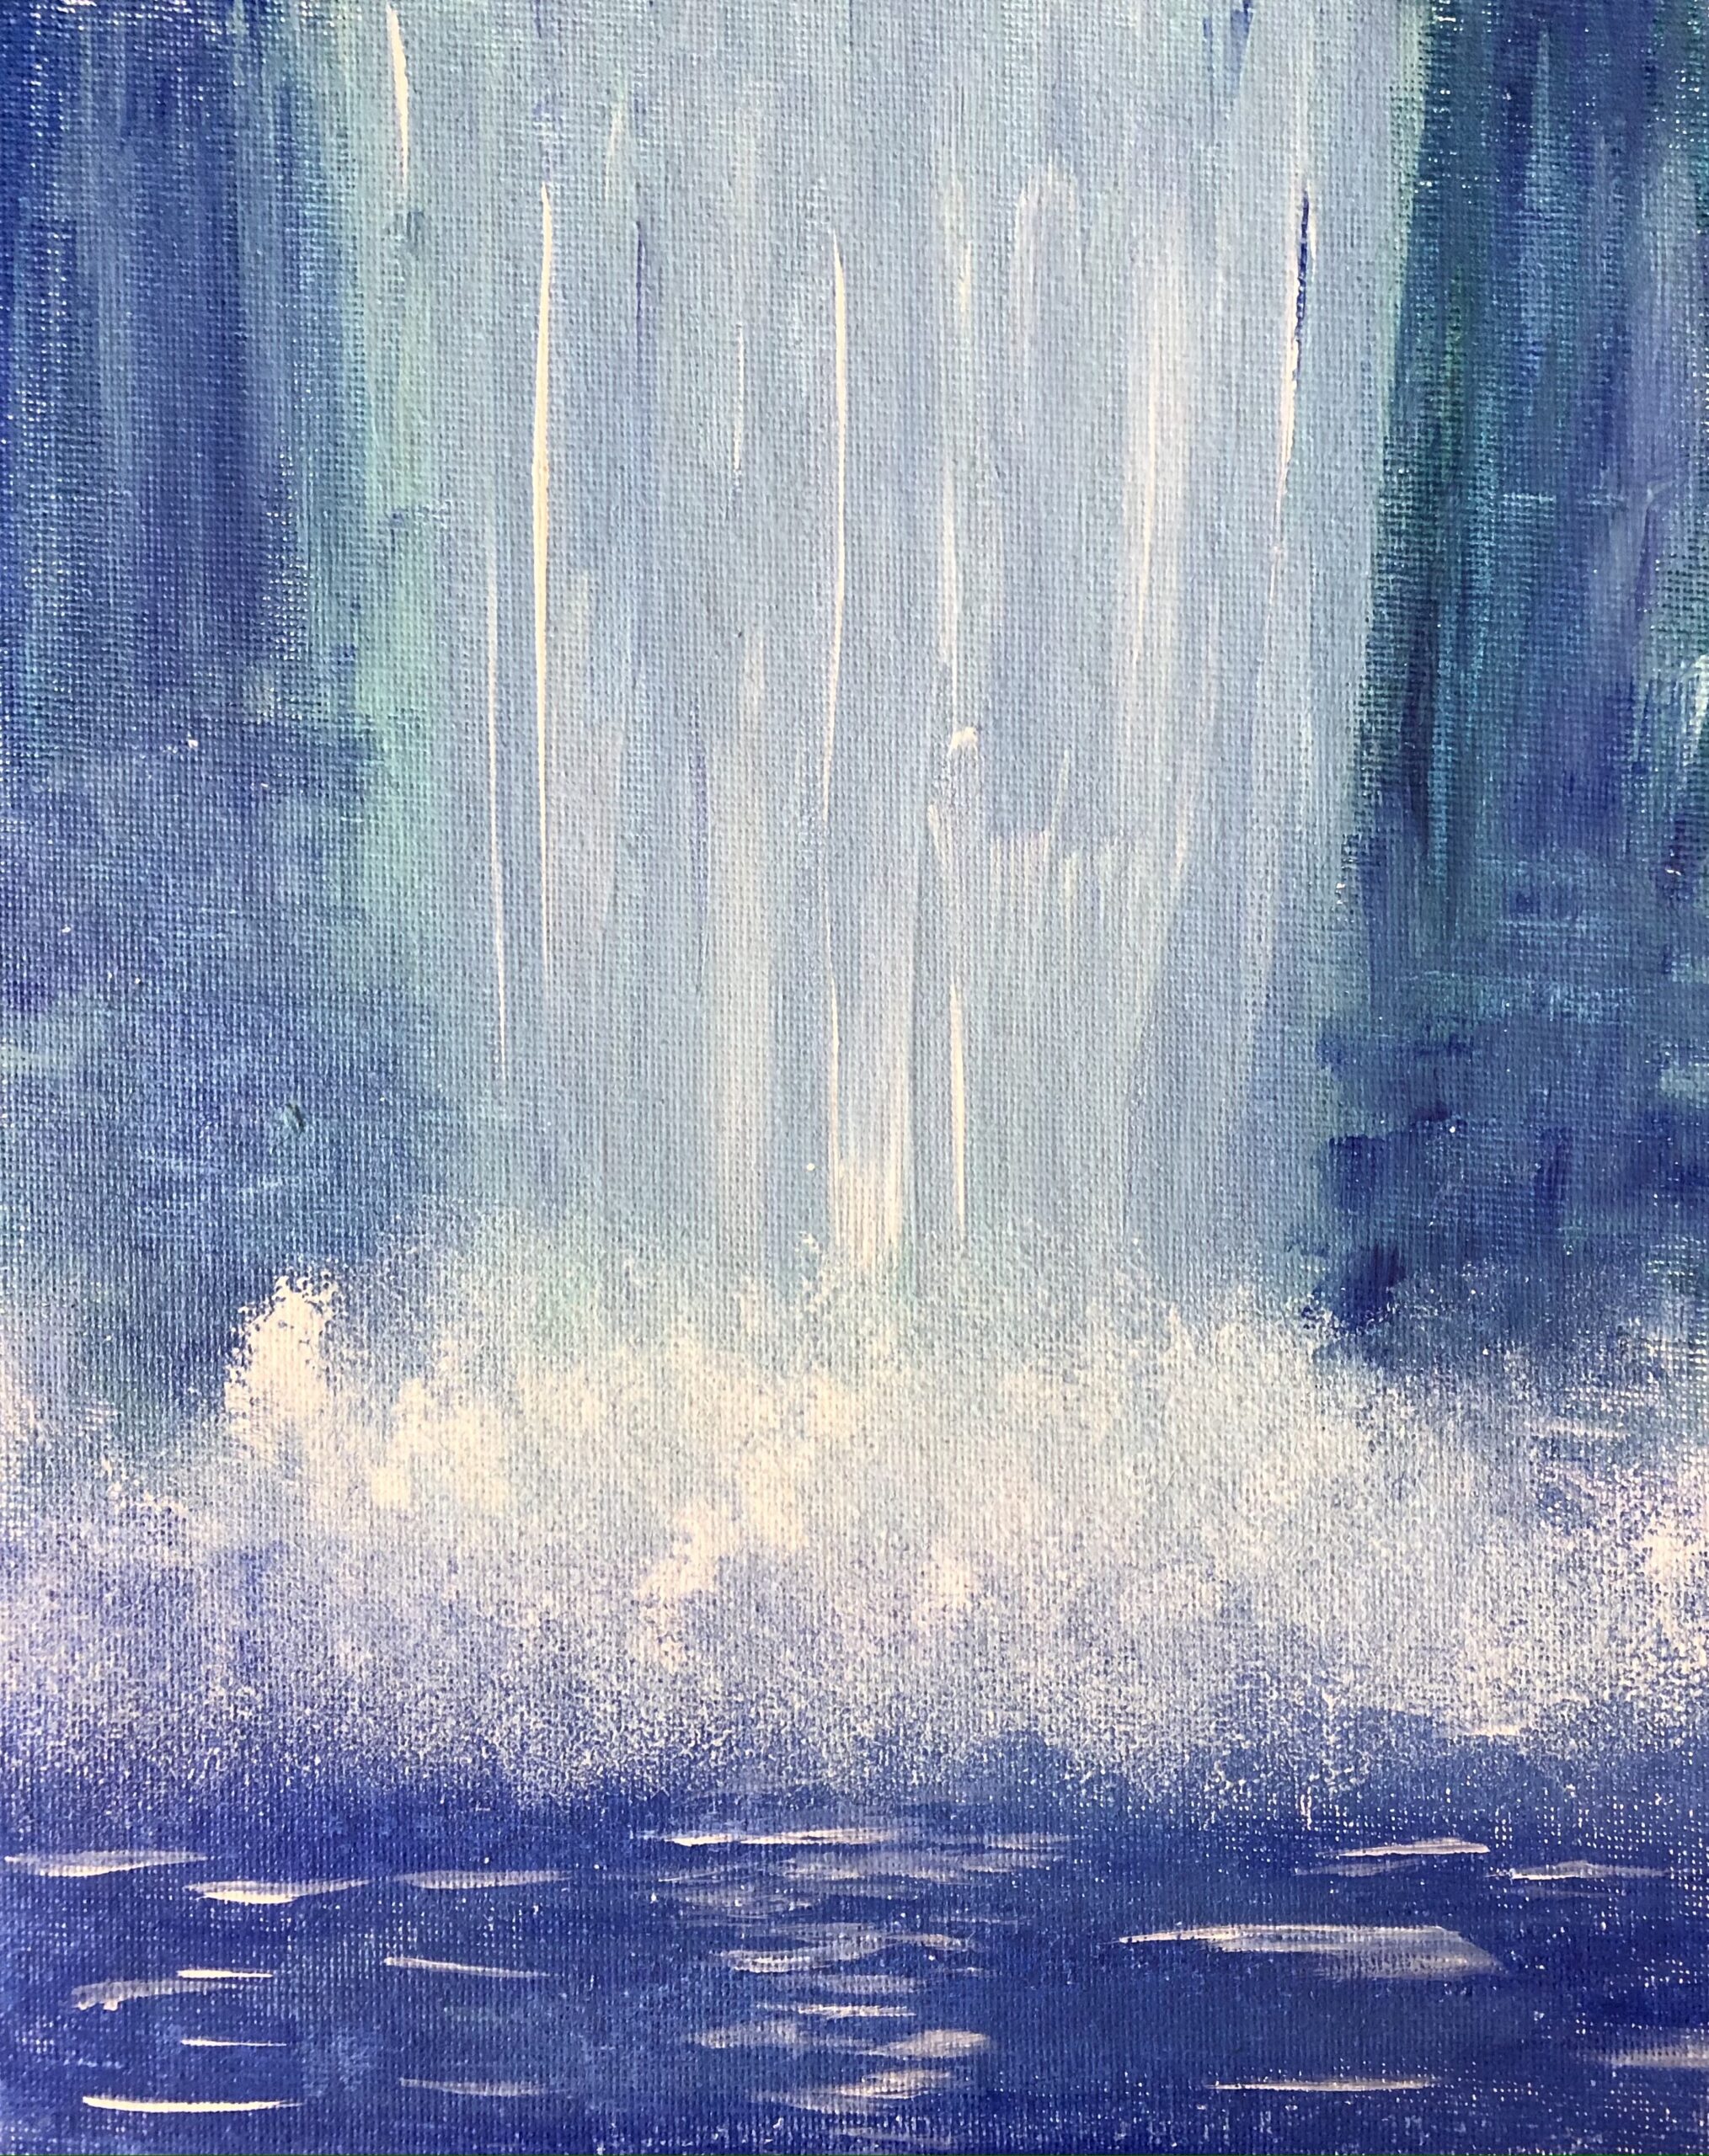 painted waterfall